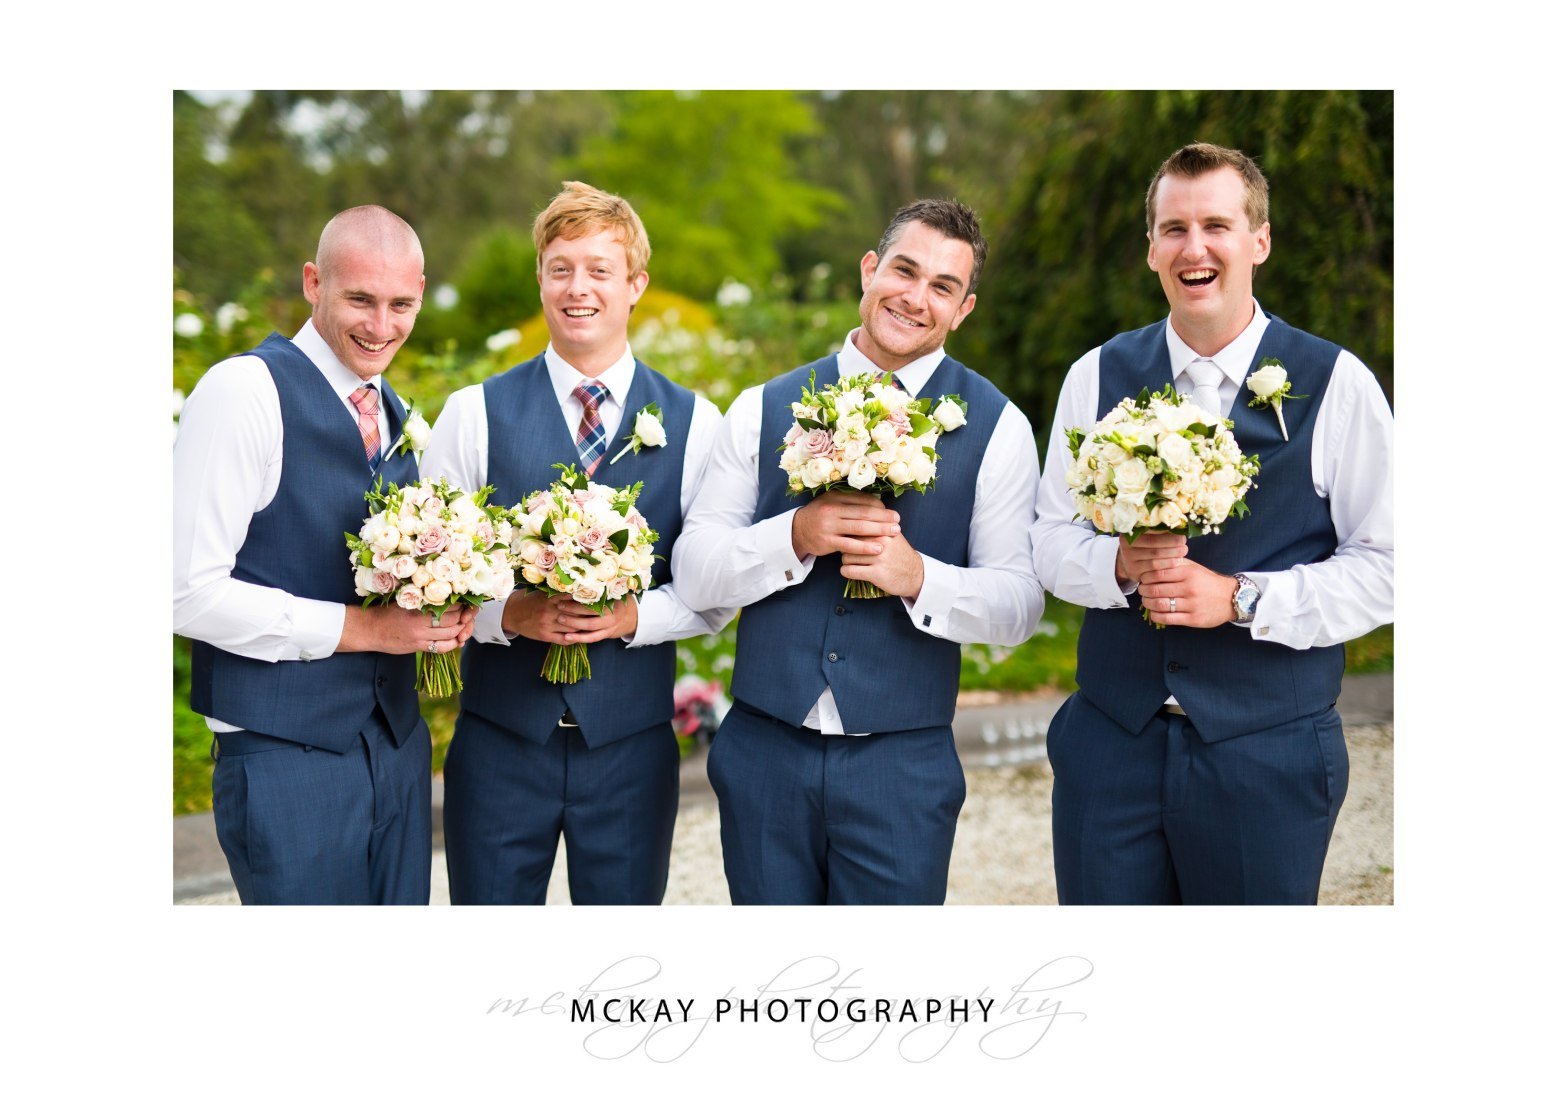 Groomsmen with flowers funny wedding photo